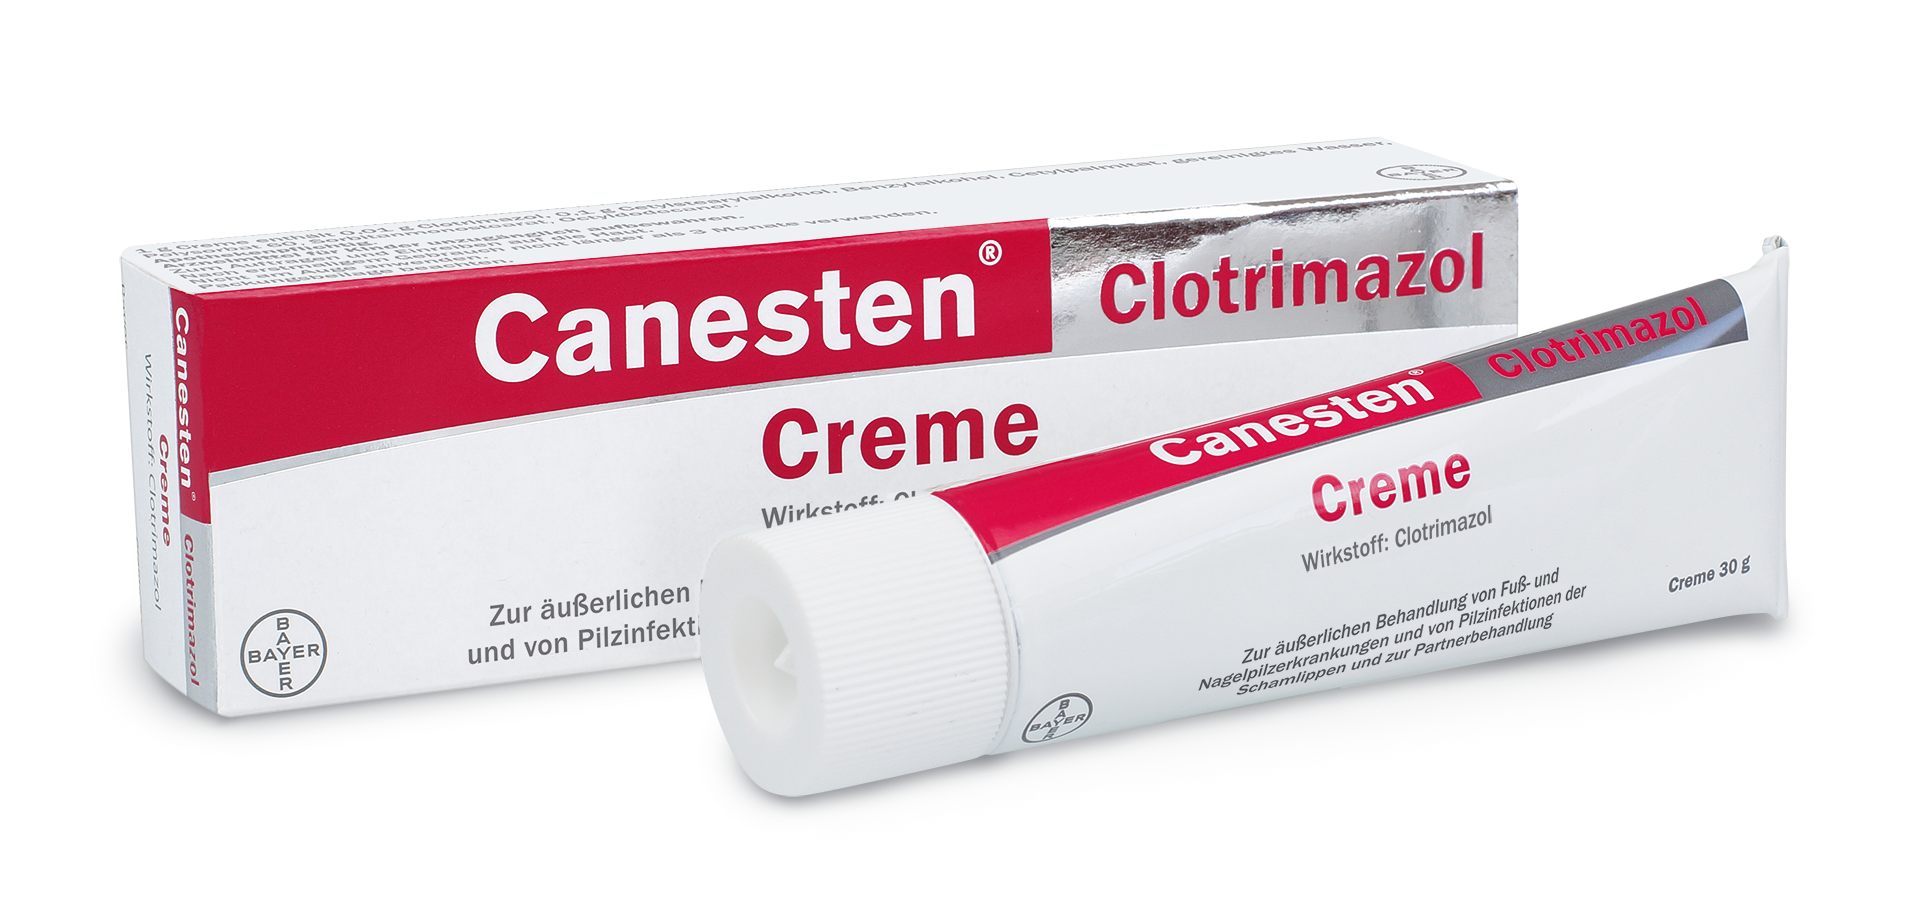 Canesten Clotrimazol - Creme